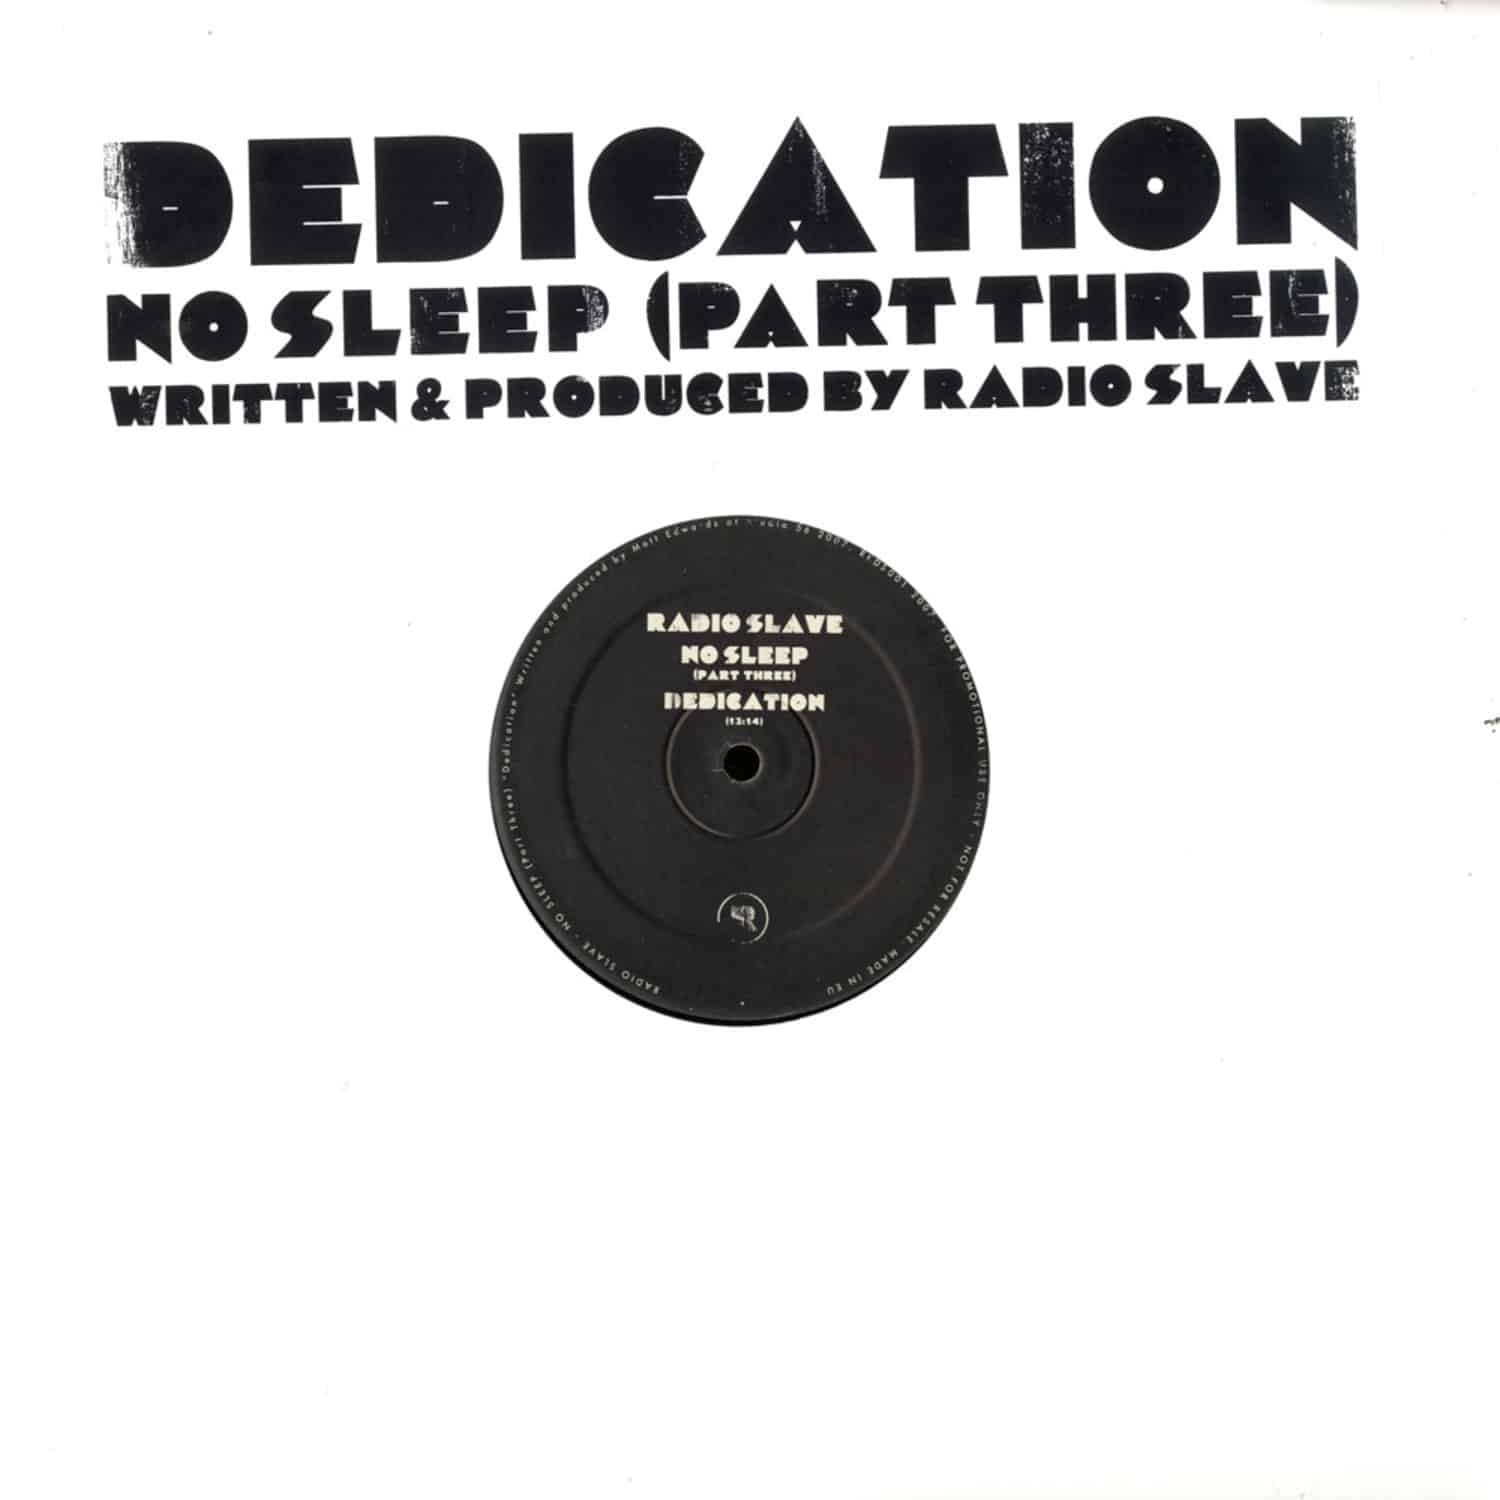 Radio Slave - NO SLEEP PART THREE - DEDICATION 